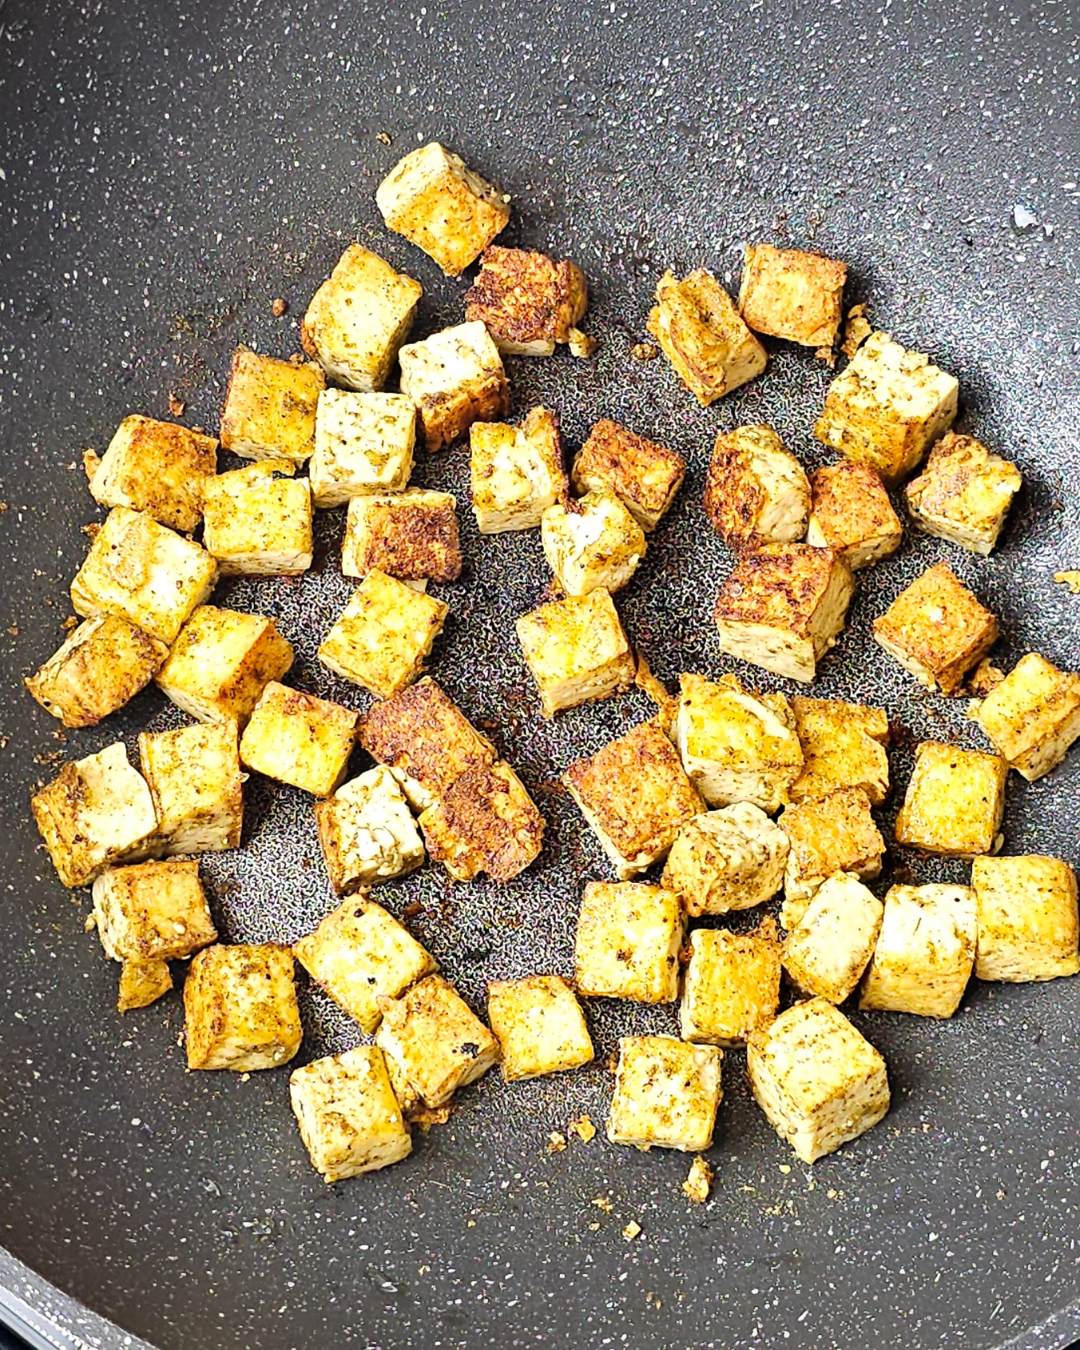 Klishi Tofu Stir Fry